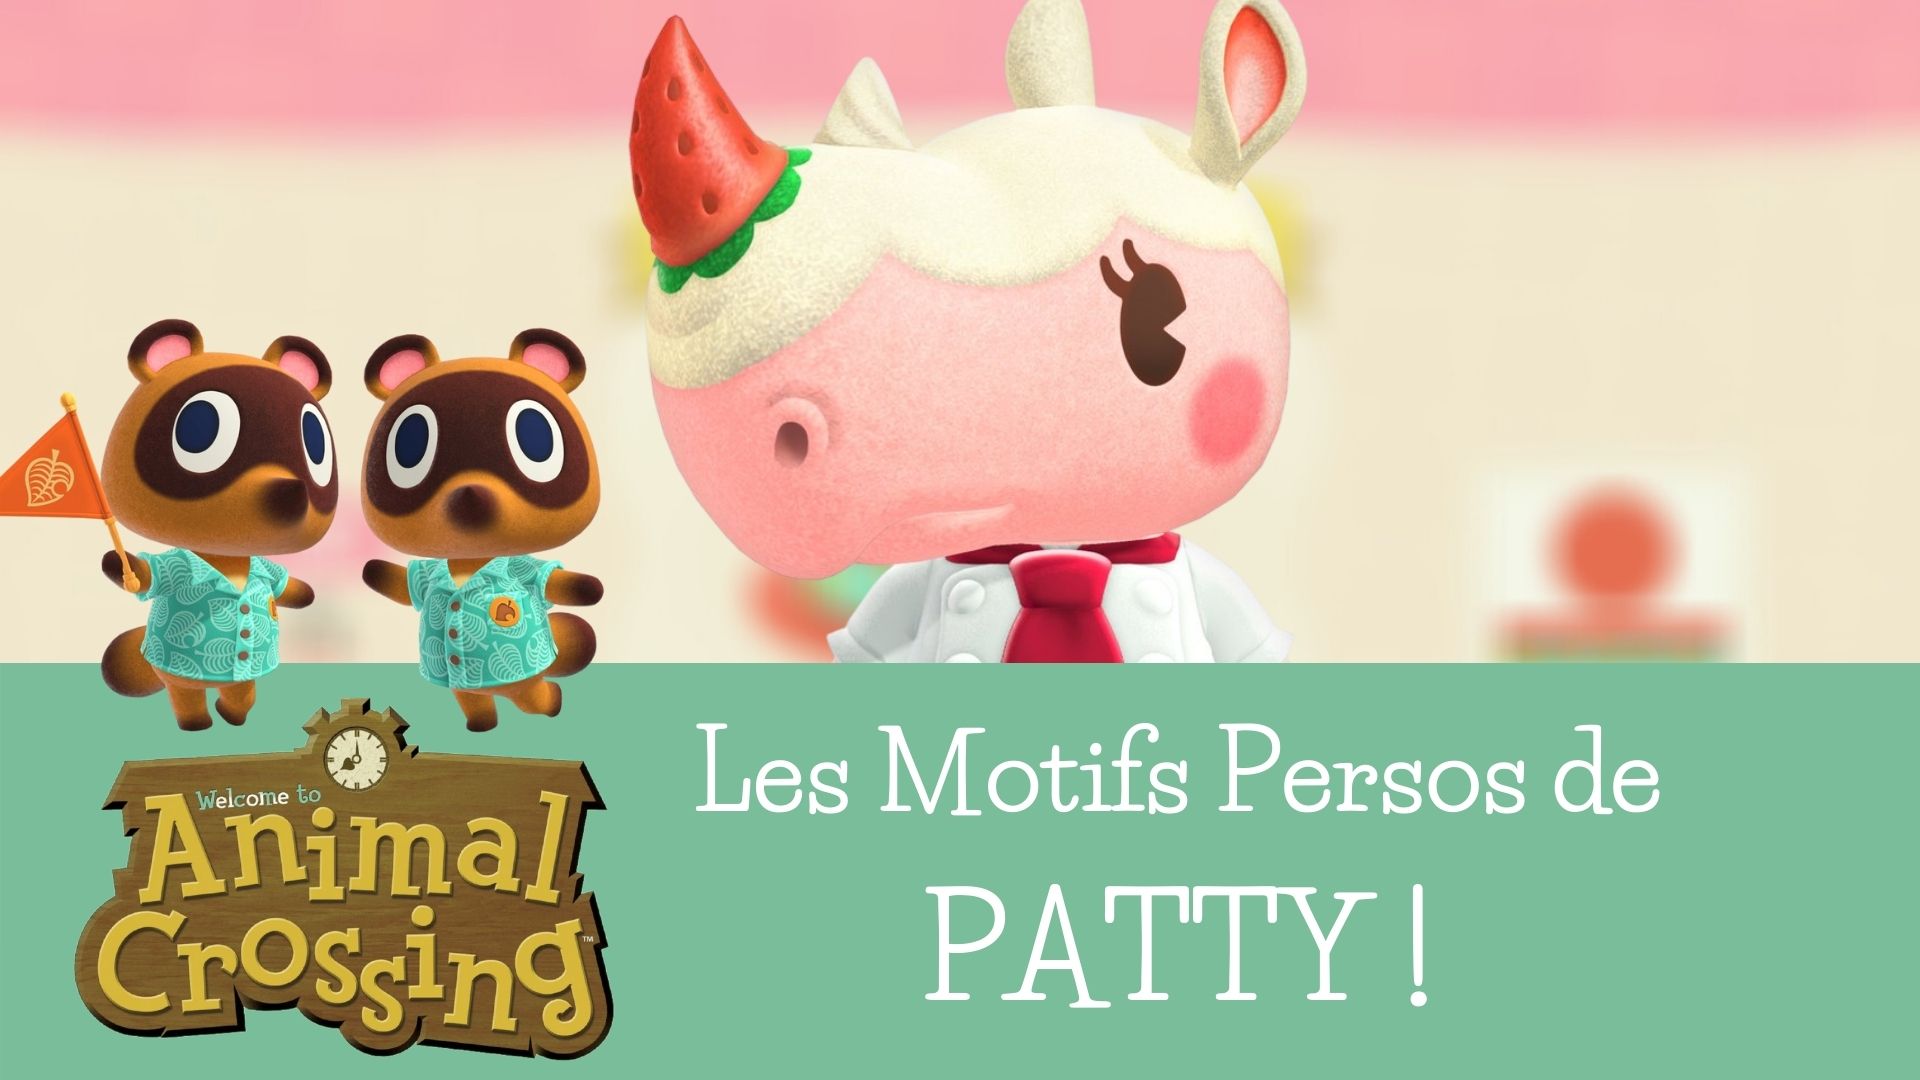 Les motifs persos de PATTY : Animal Crossing New Horizons ...